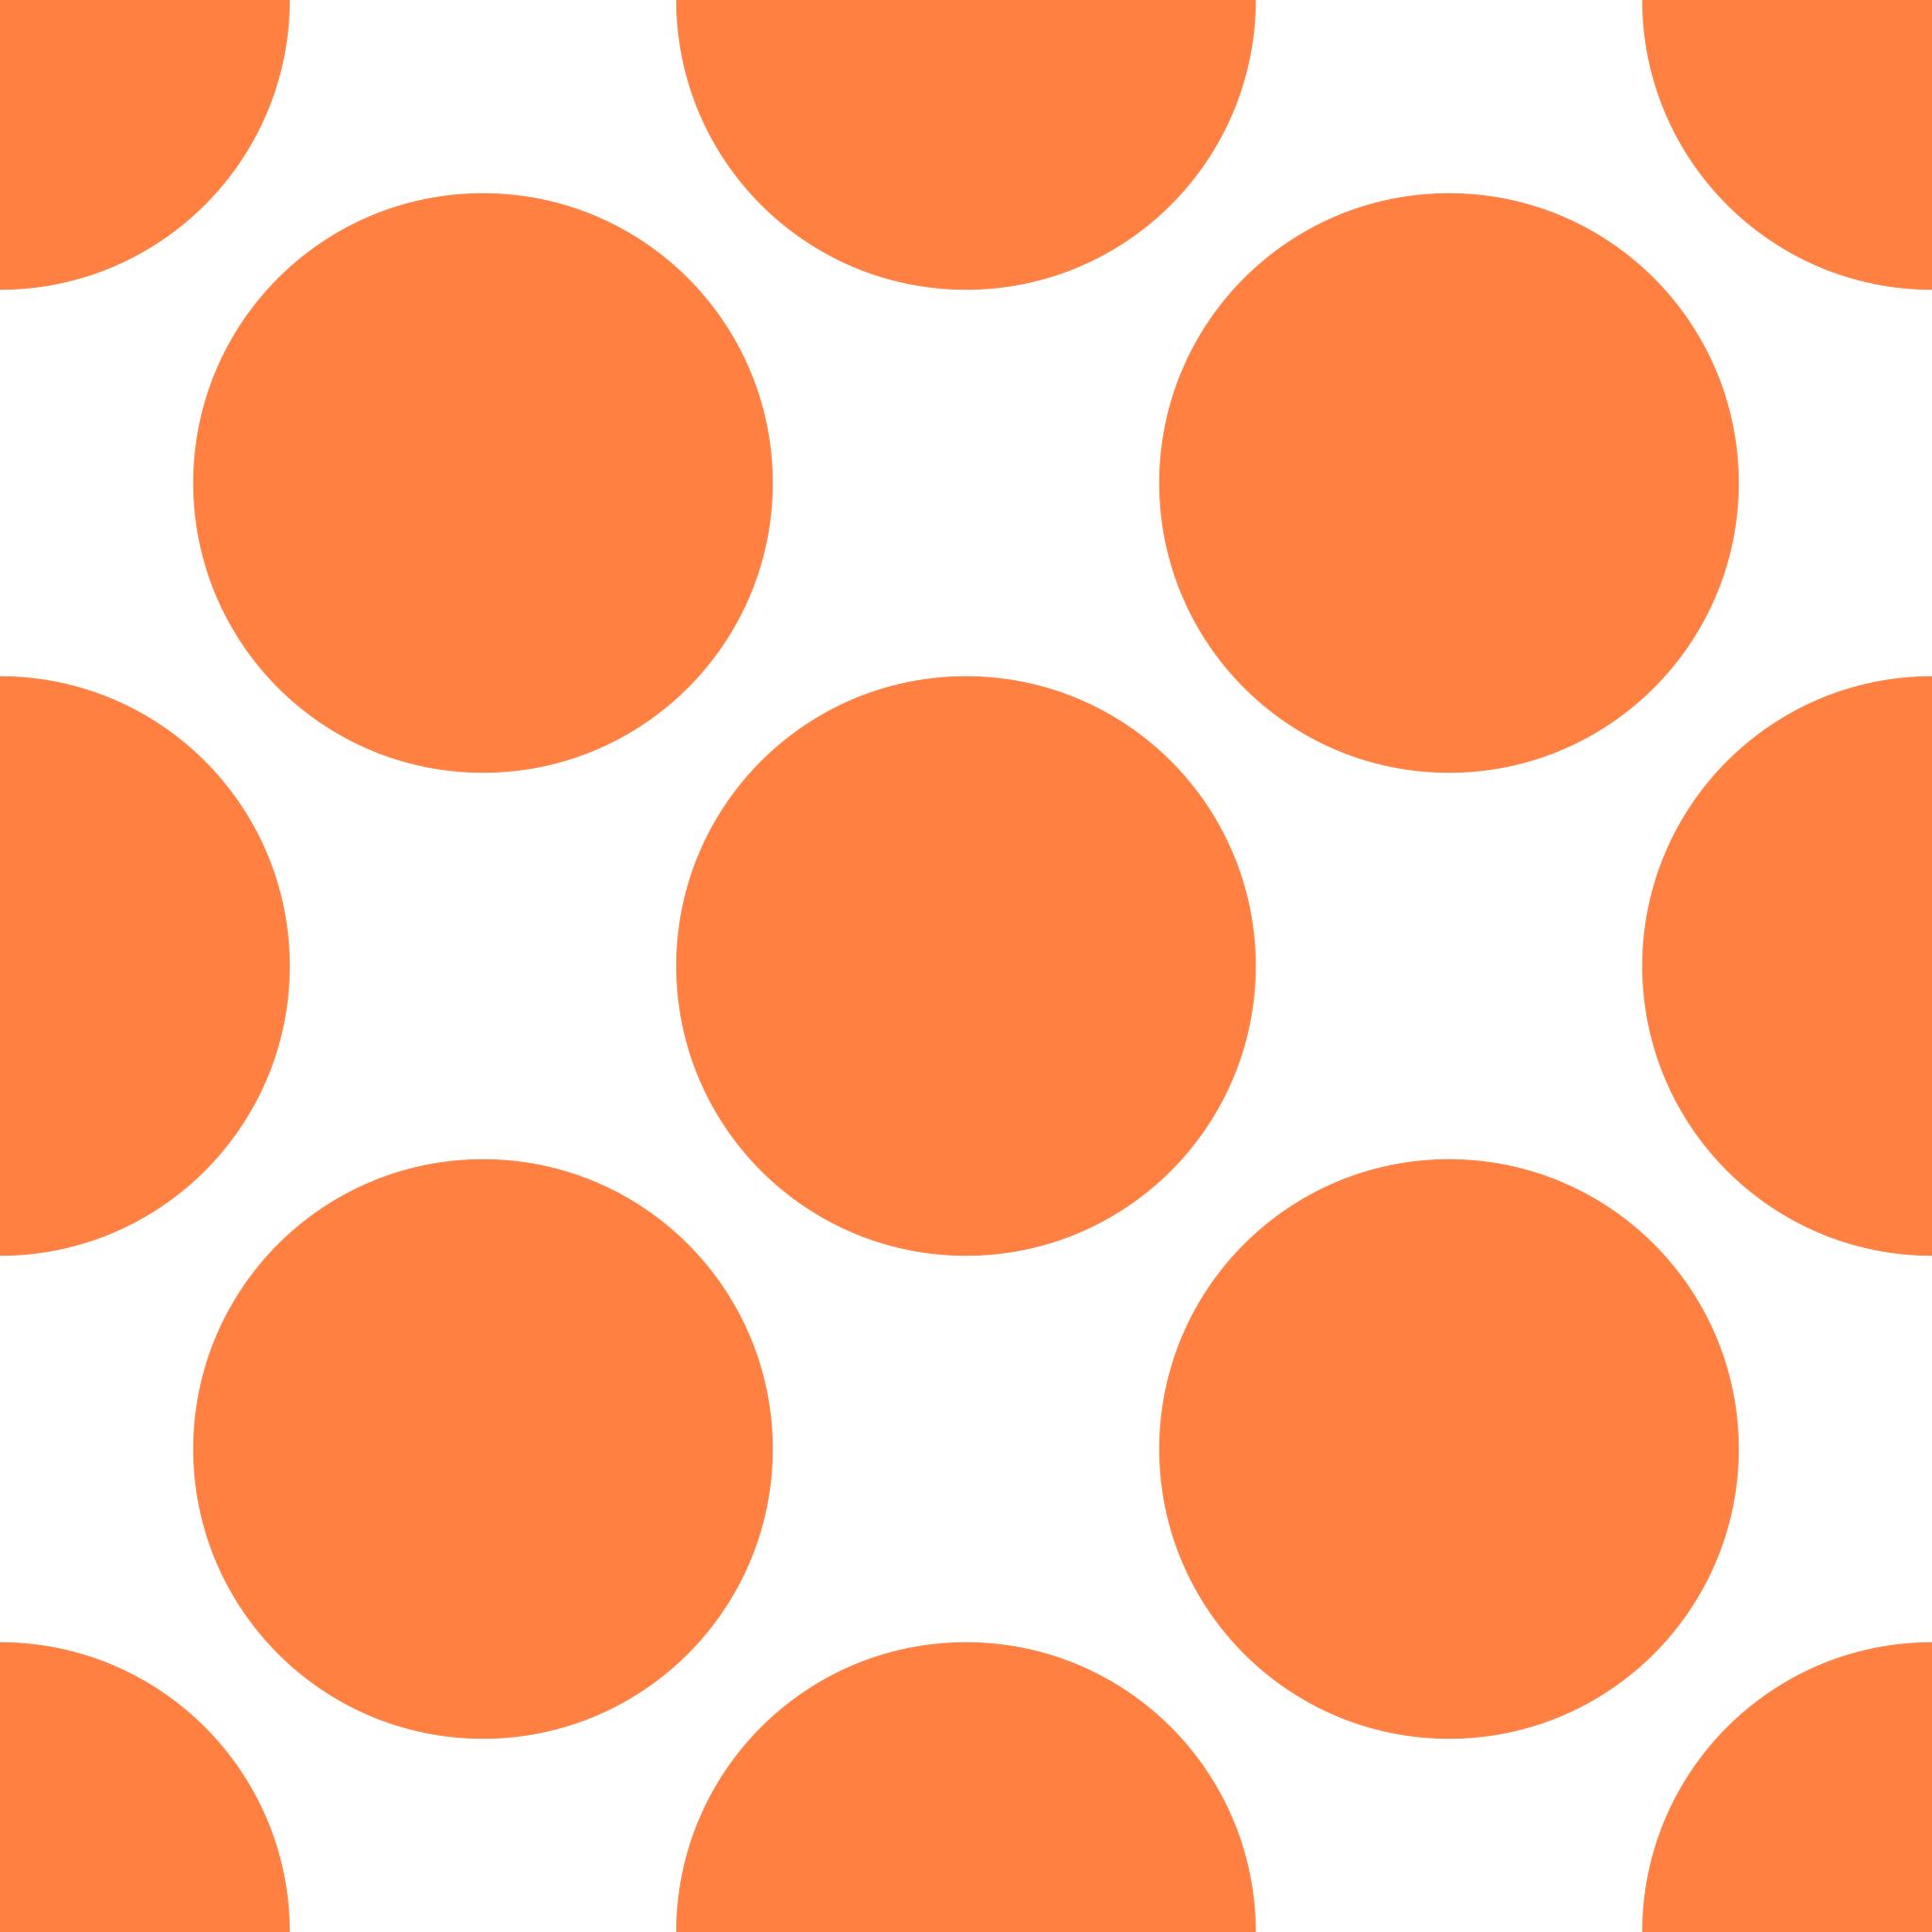 Pattern 0 9 10. Оранжевый круг. Оранжевые кружочки. Паттерн круги. Оранжевый узор.